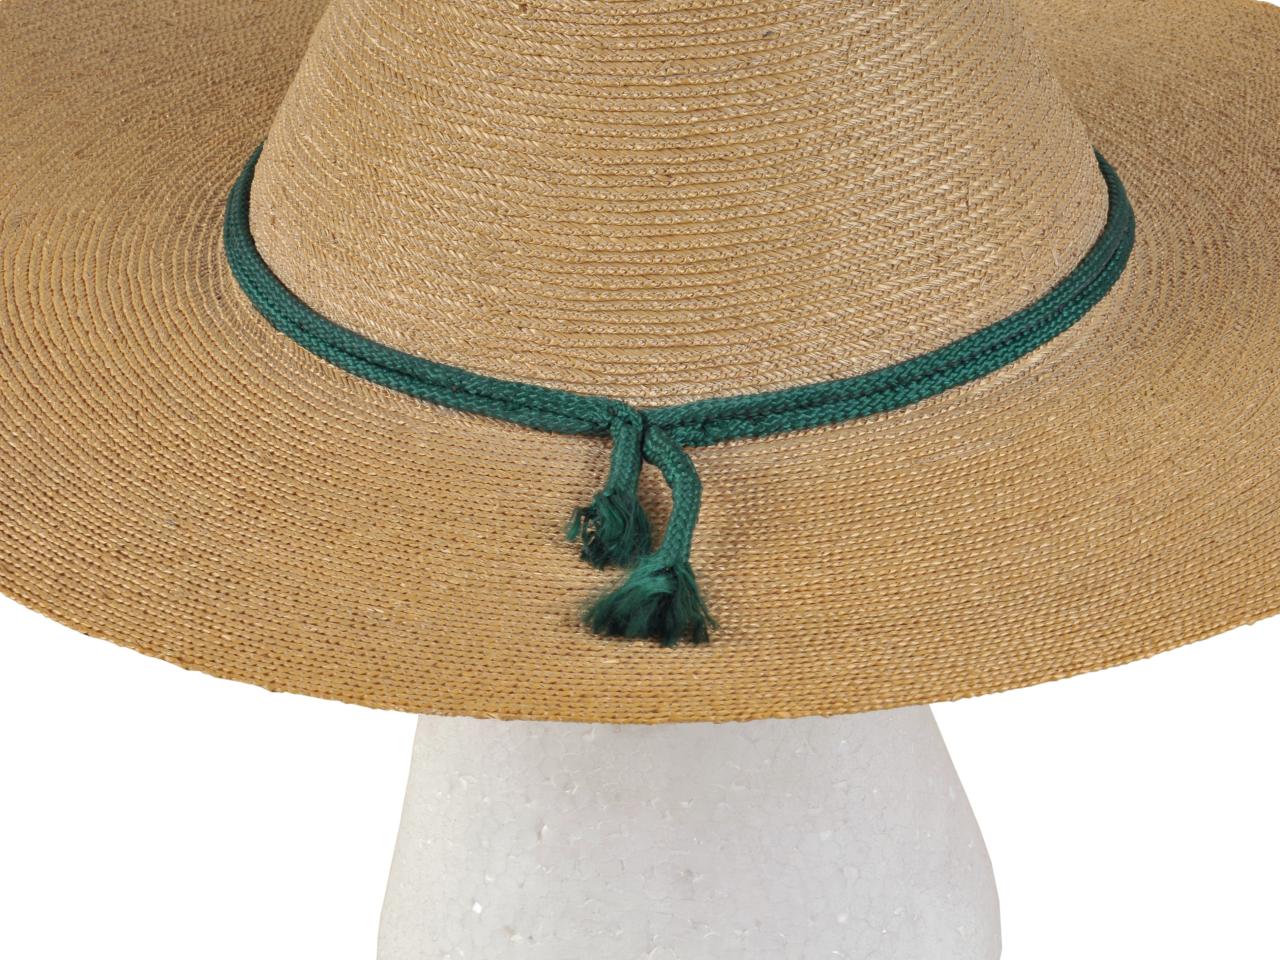 Detalle de bonete huicano, sombrero de hombre en paja teatina trenzada en color natural